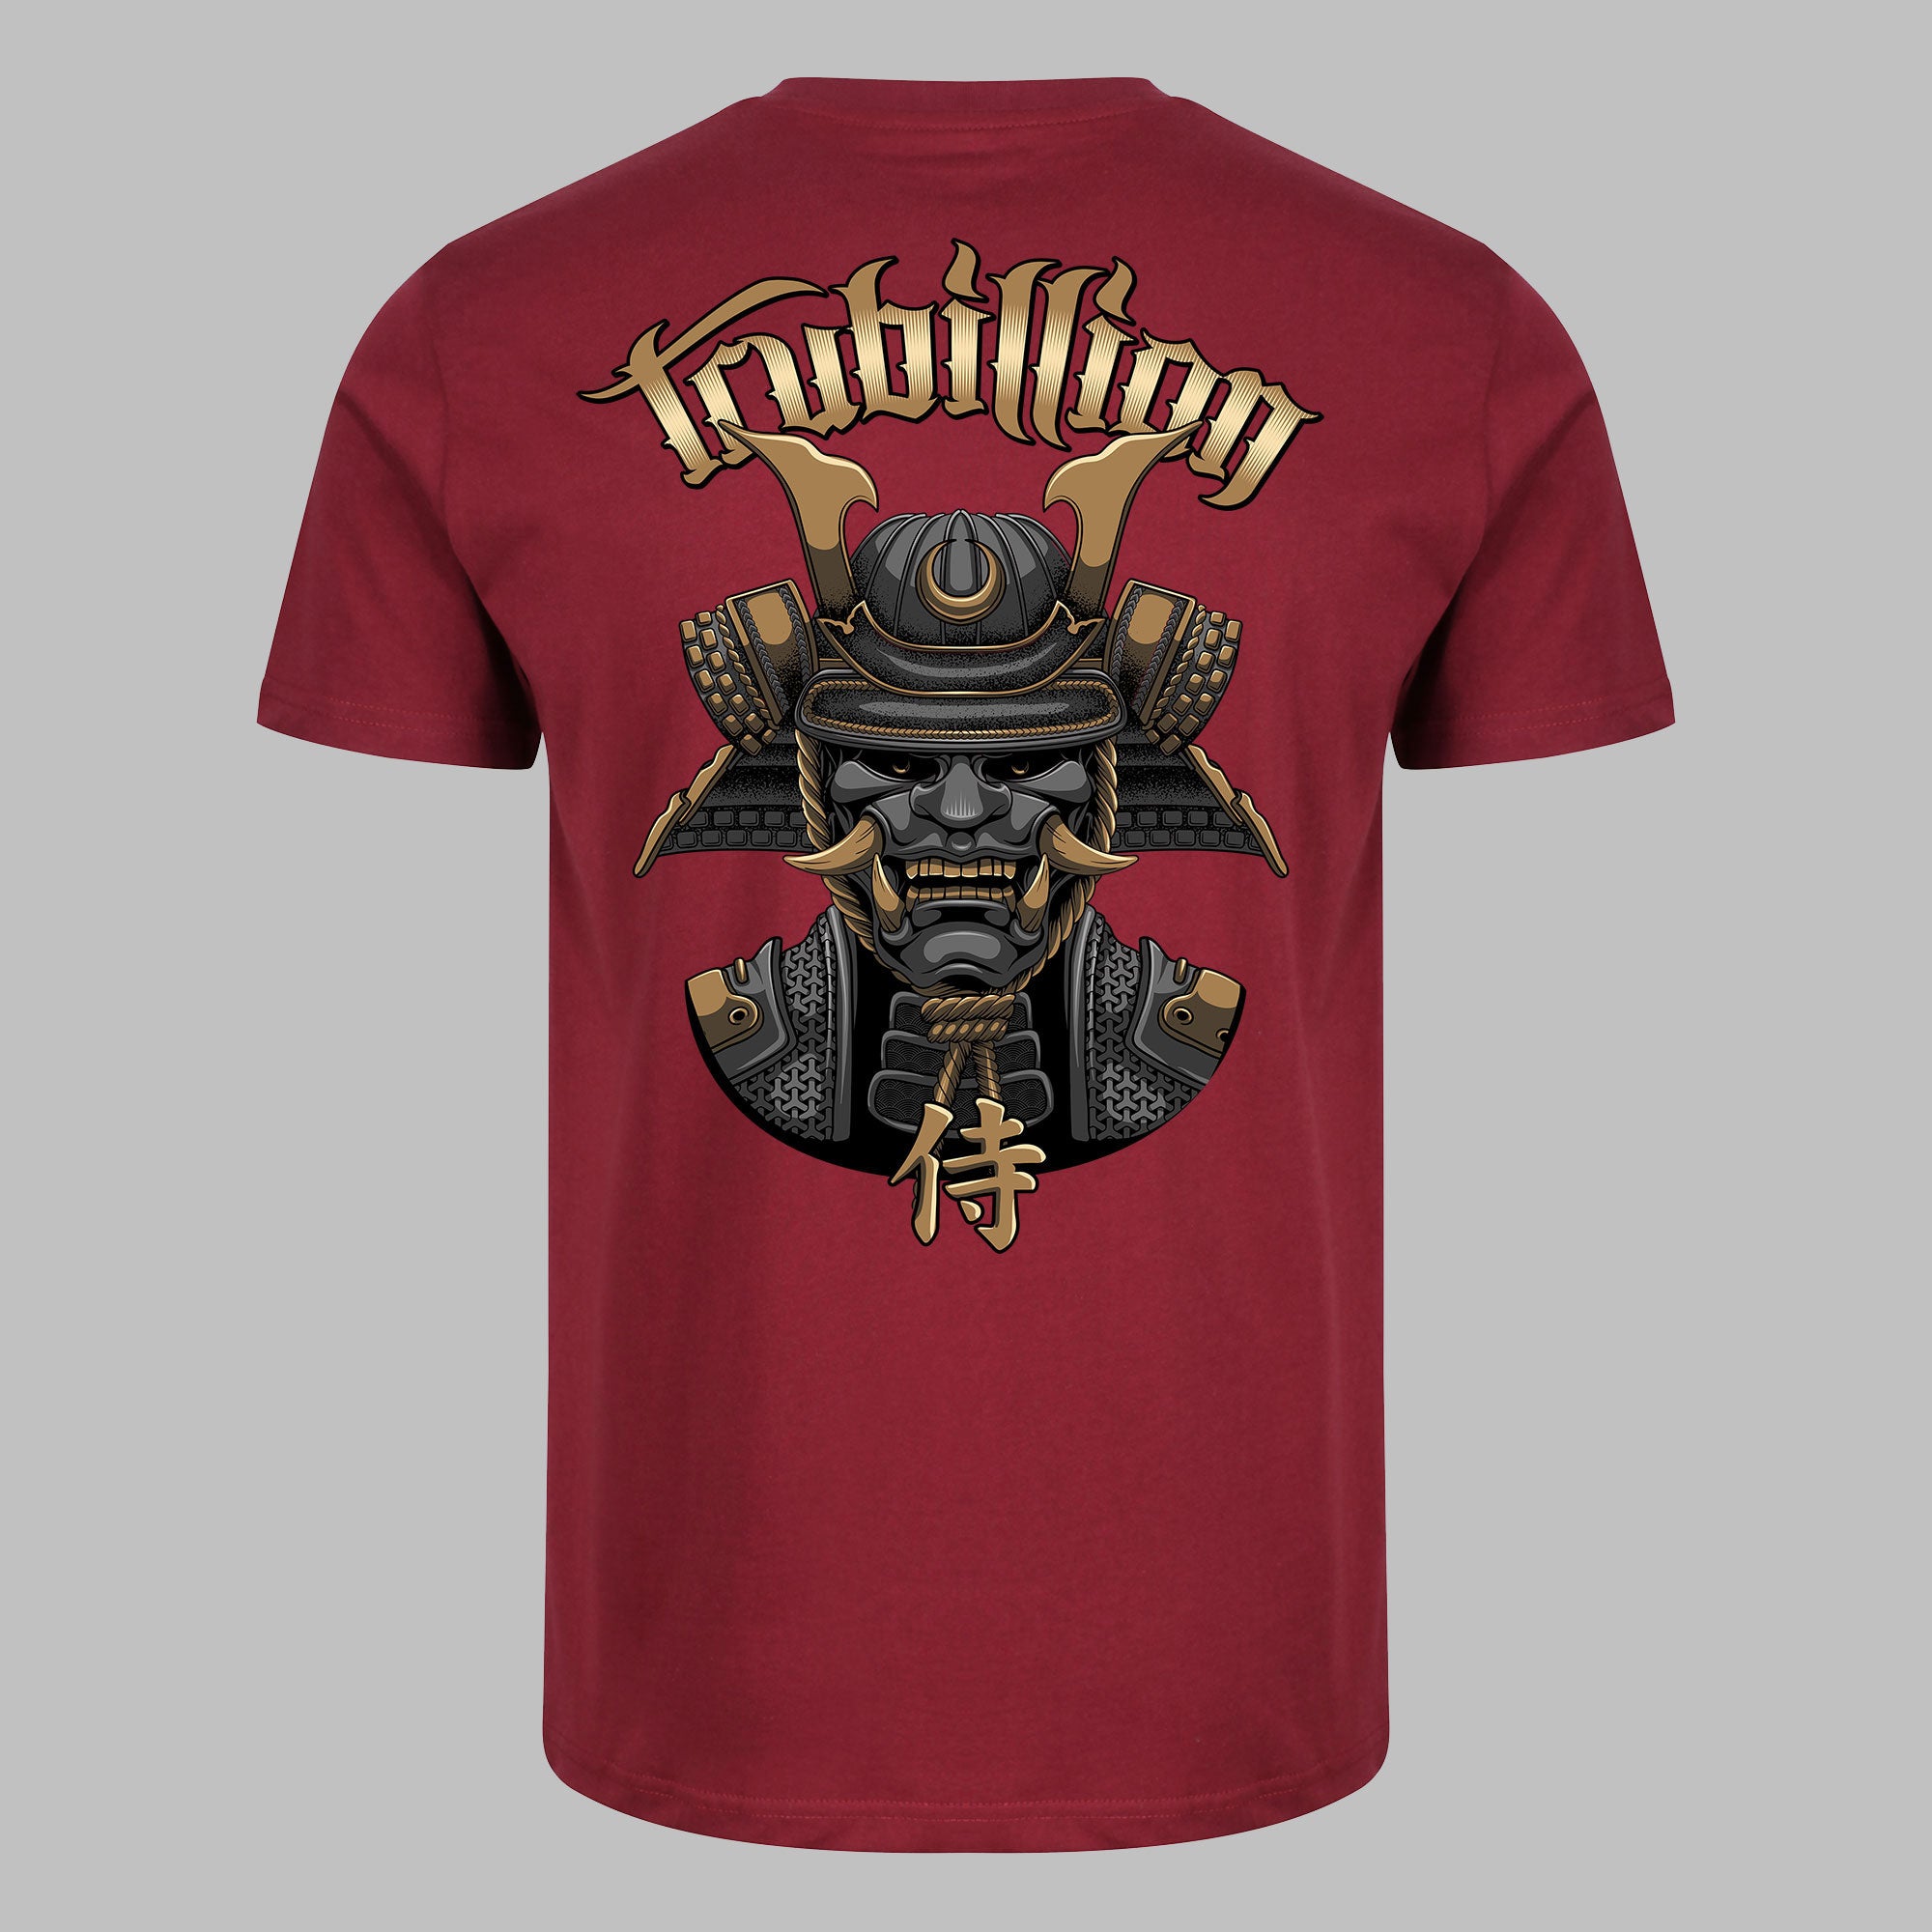 T-shirt Design | Samurai Viking Design